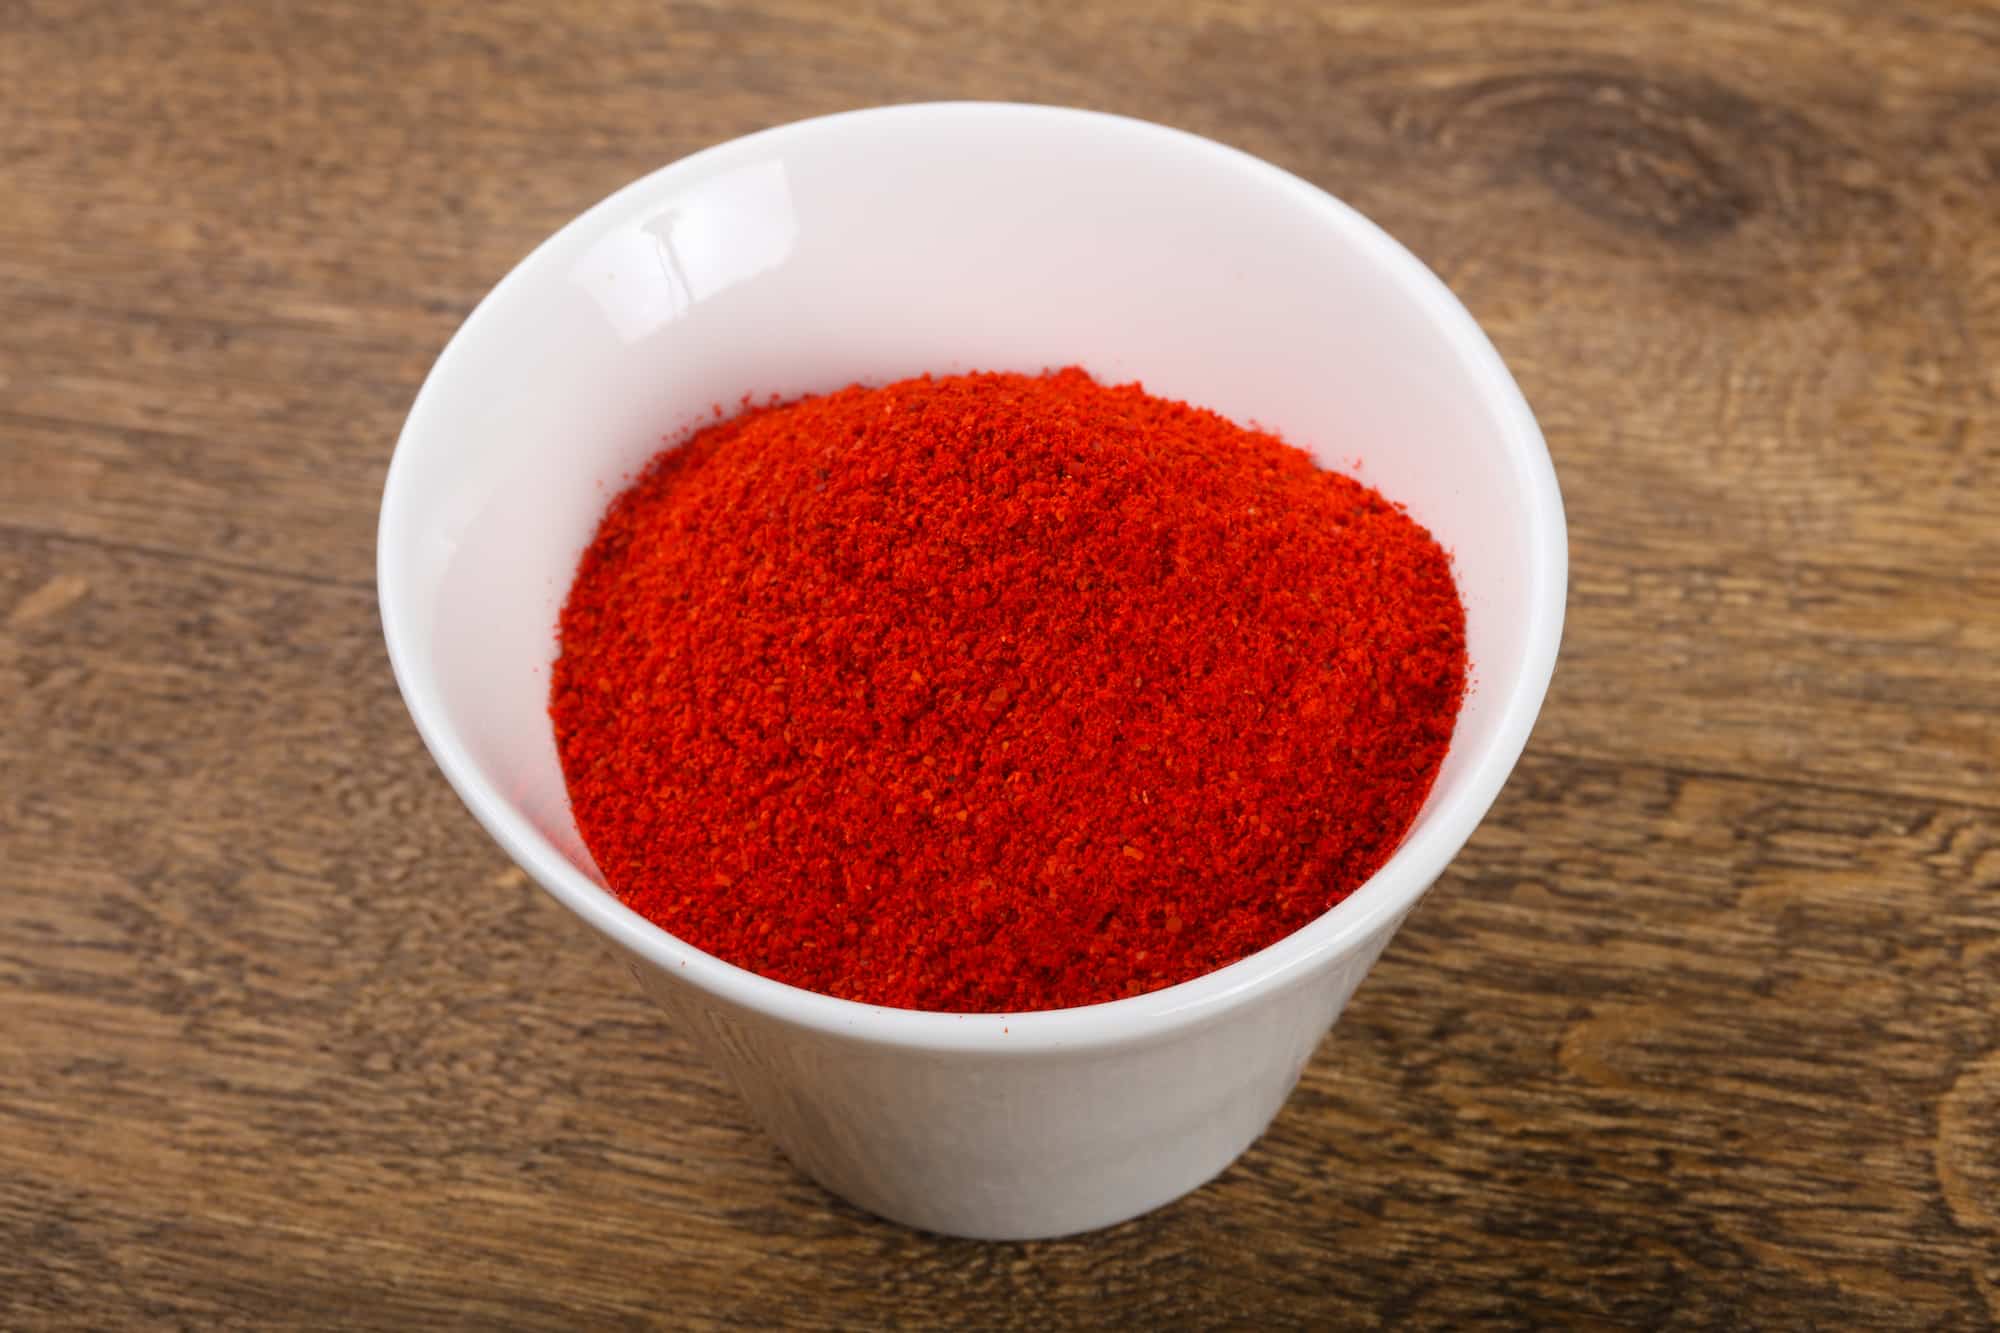 https://www.spicemountain.co.uk/wp-content/uploads/2019/10/red-bell-pepper-powder.jpg